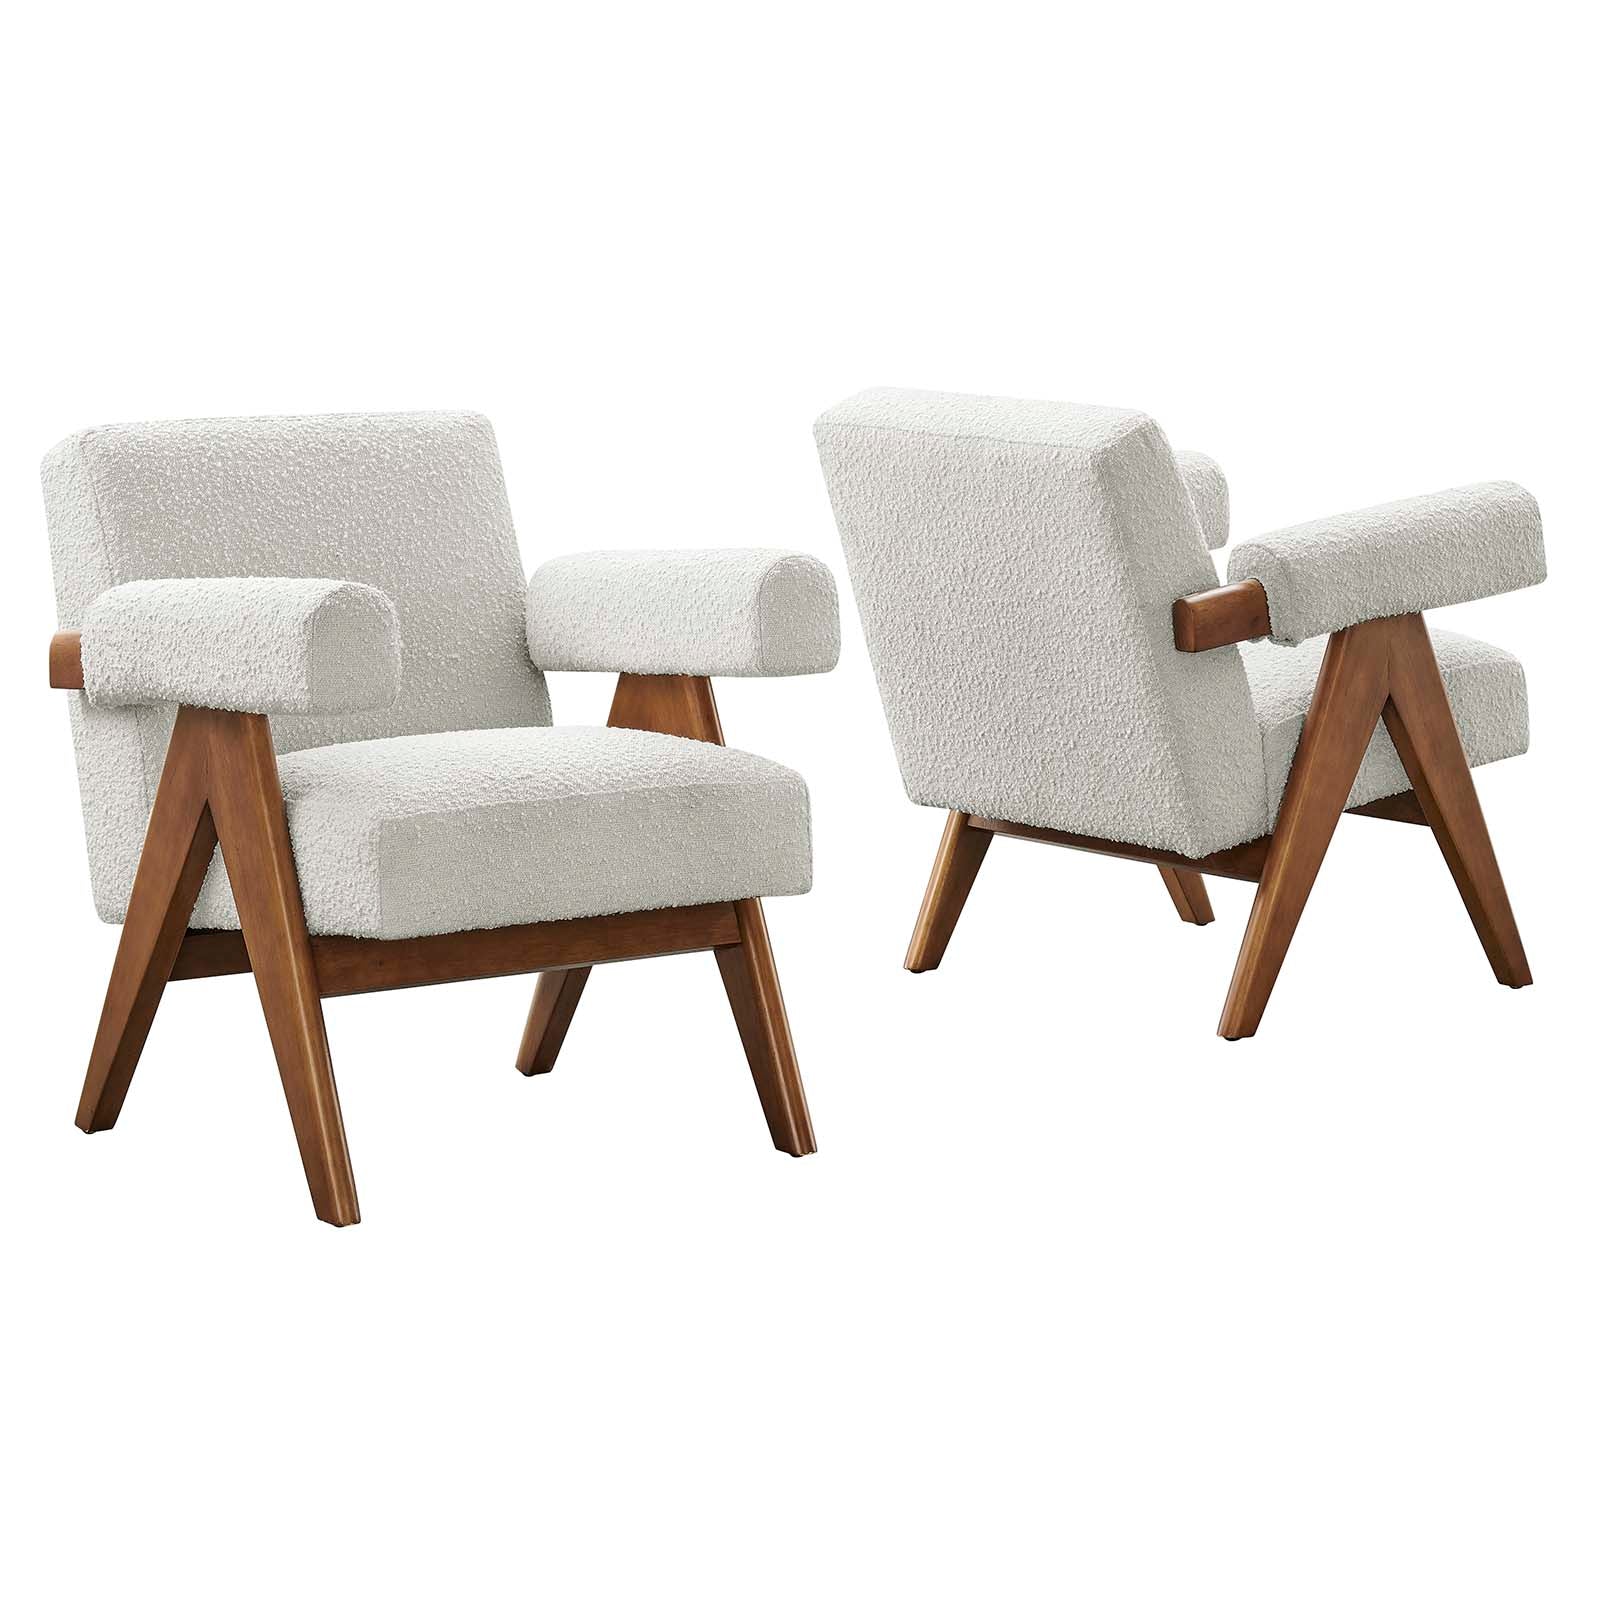 Lyra Boucle Fabric Armchair - Set of 2 - East Shore Modern Home Furnishings